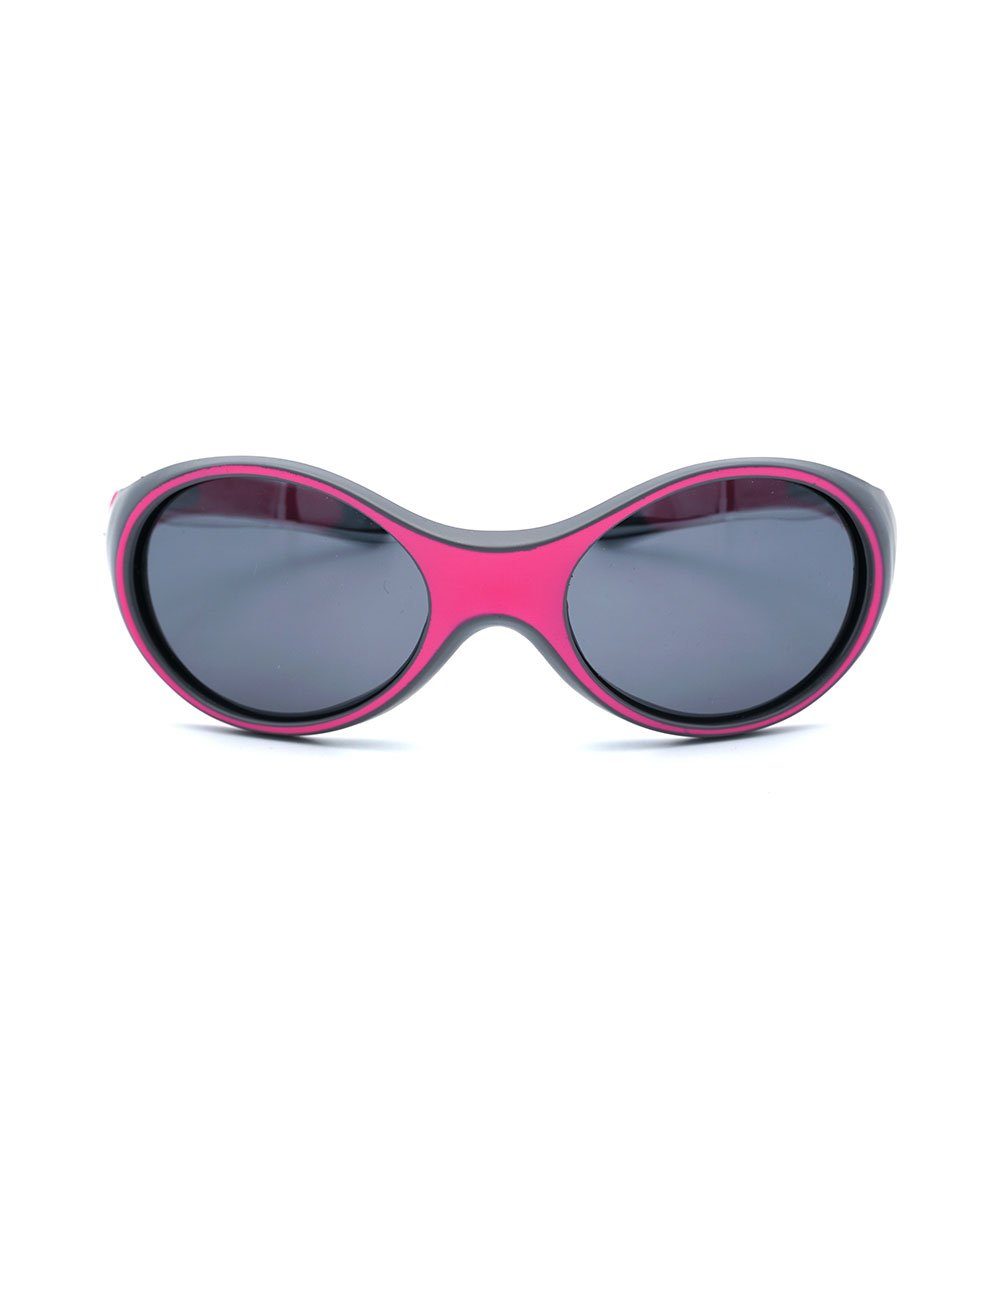 MAXIMO KIDS-Sonnenbrille grey inkl.Box,Microfaserb. 'sporty' Sonnenbrille pink/dark